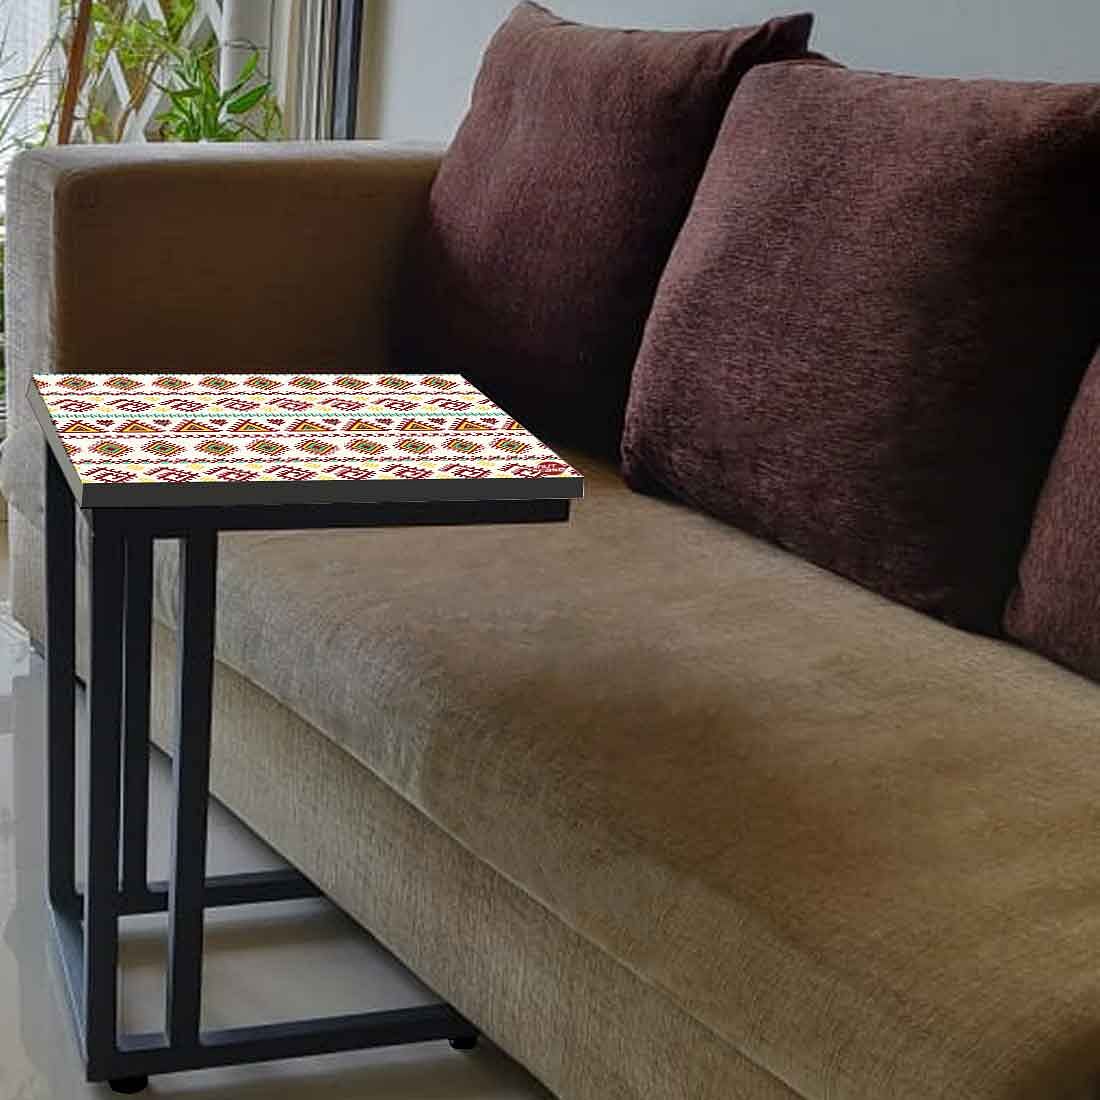 C Shaped Sofa Table  - Aztec White Green Pattern Nutcase